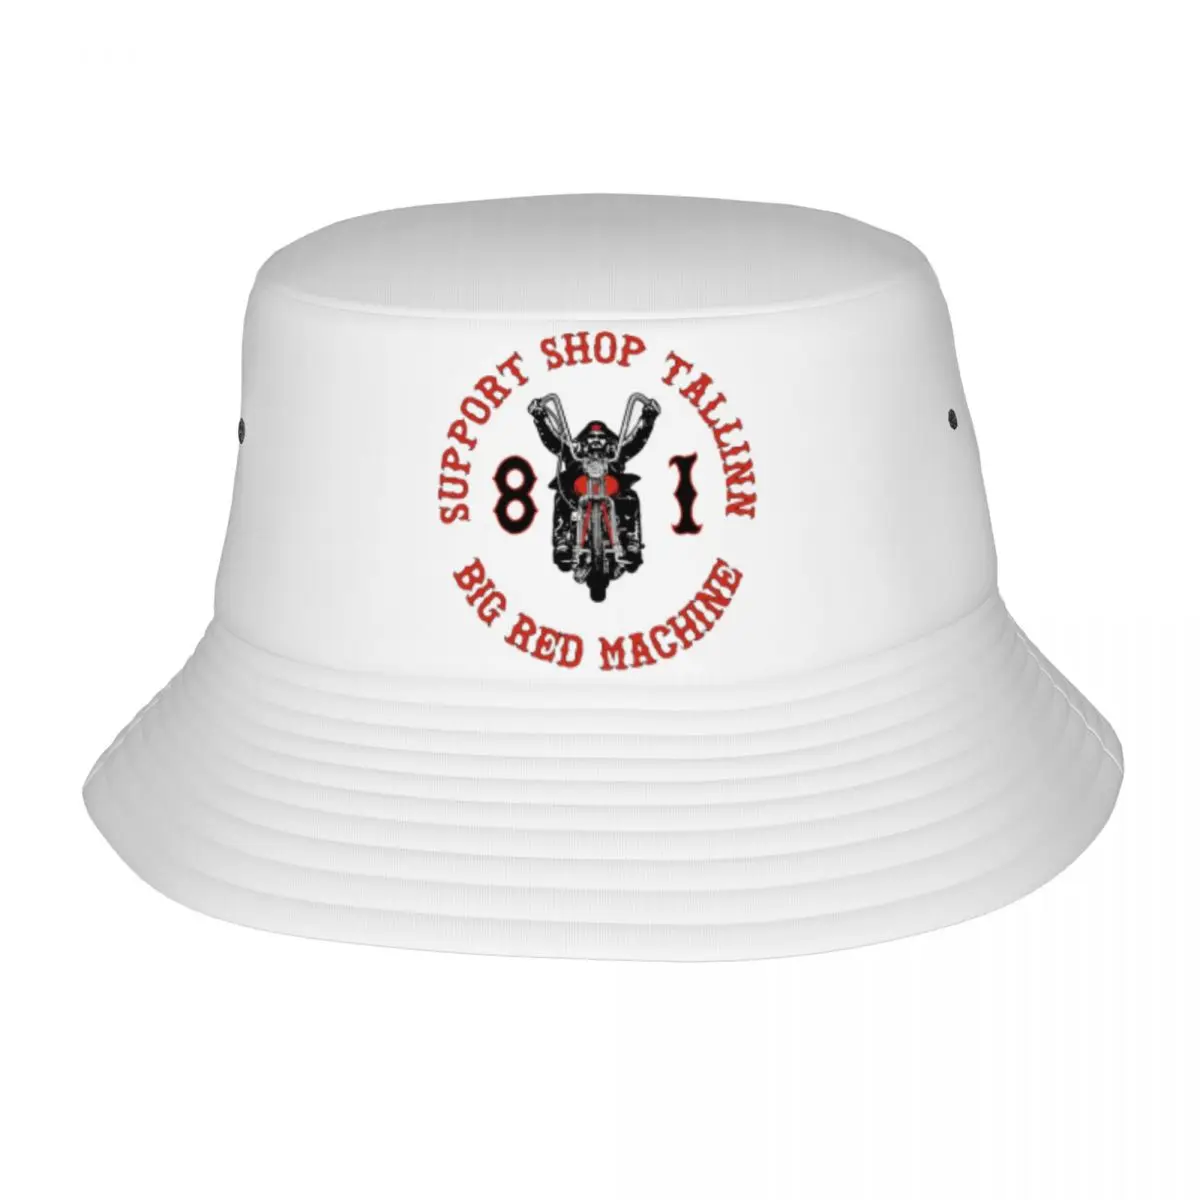 

Hells Angels Support 81 Bucket Hat Travel Headwear Motorcycle Club Brotherhood Fishing Fisherman Hats Outdoor Boonie Hat